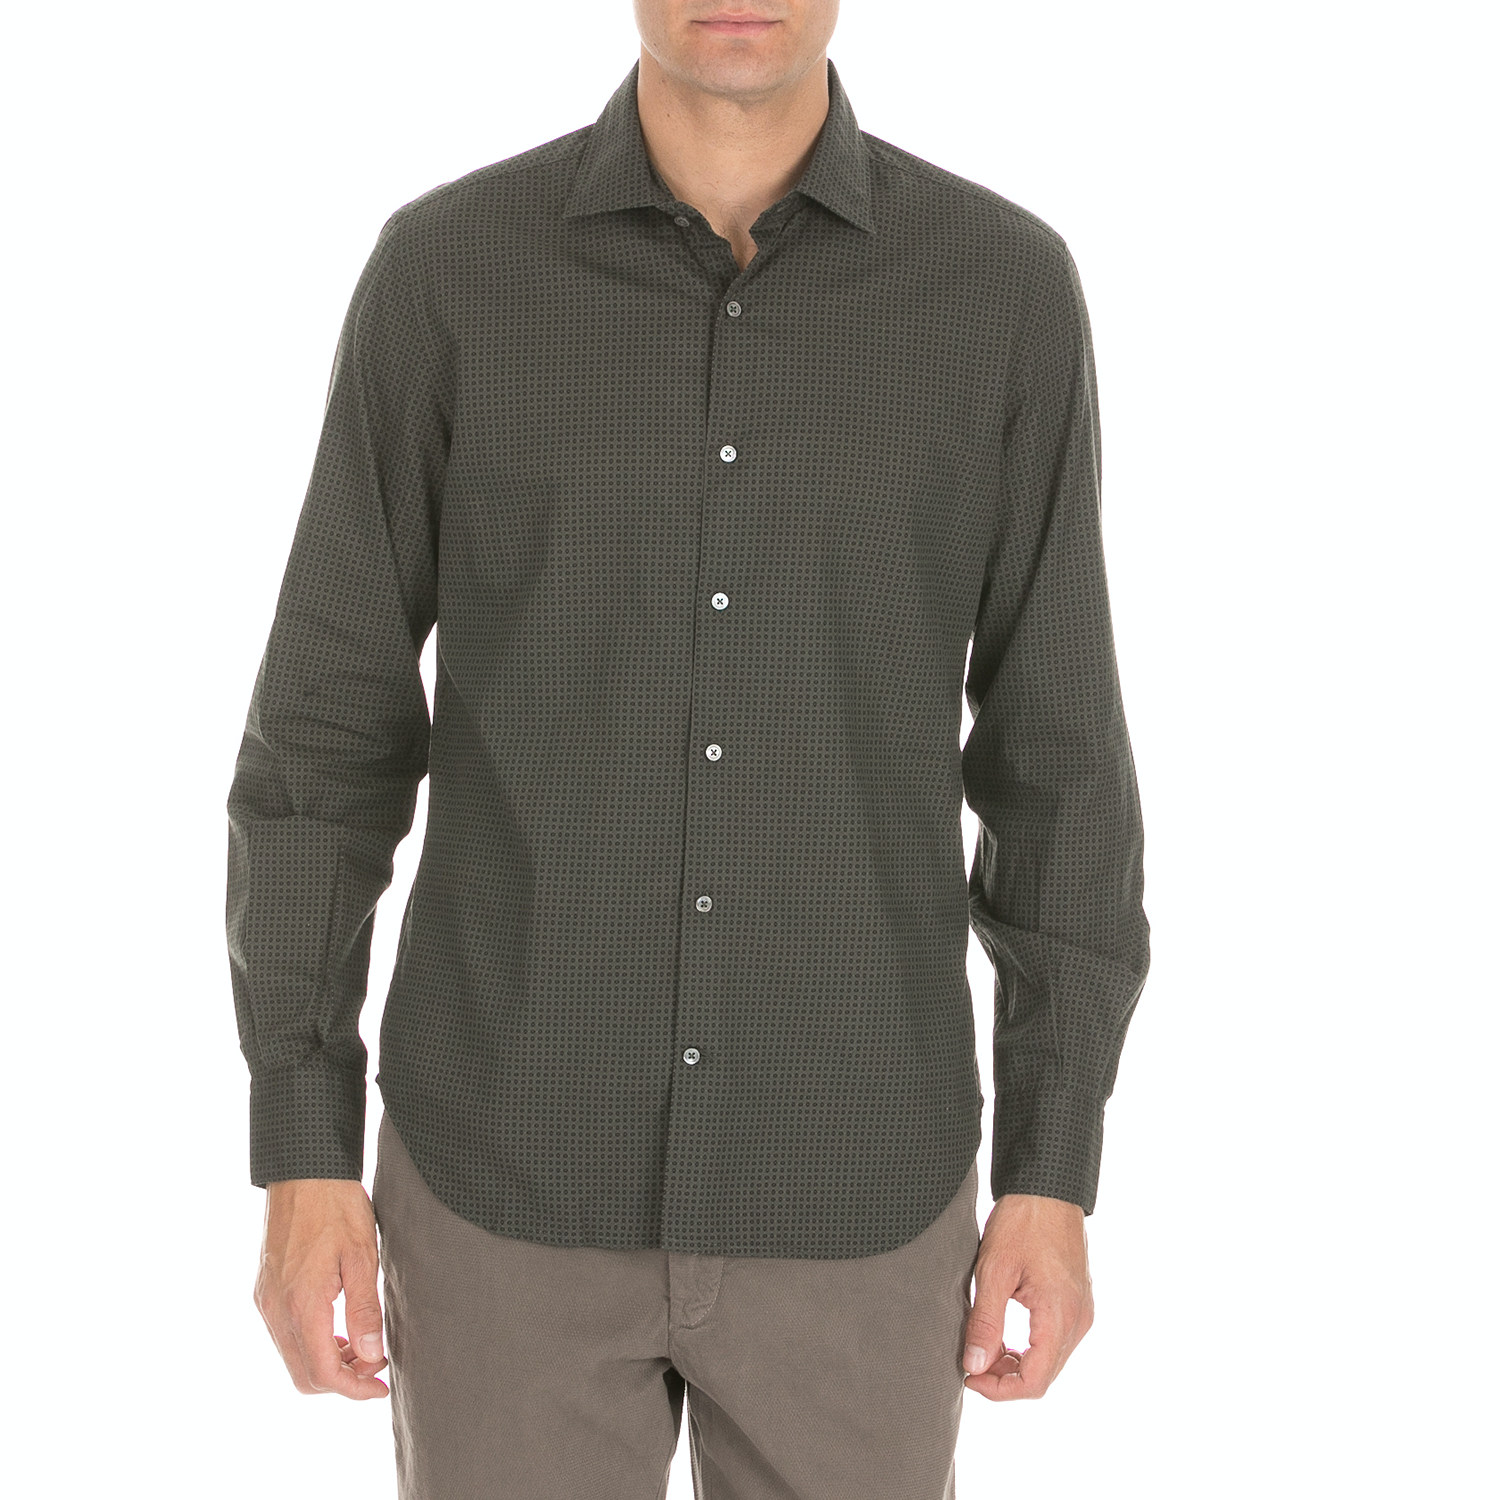 BROOKSFIELD - Ανδρικό πουκάμισο BROOKSFIELD χακί μαύρο Ανδρικά/Ρούχα/Πουκάμισα/Μακρυμάνικα